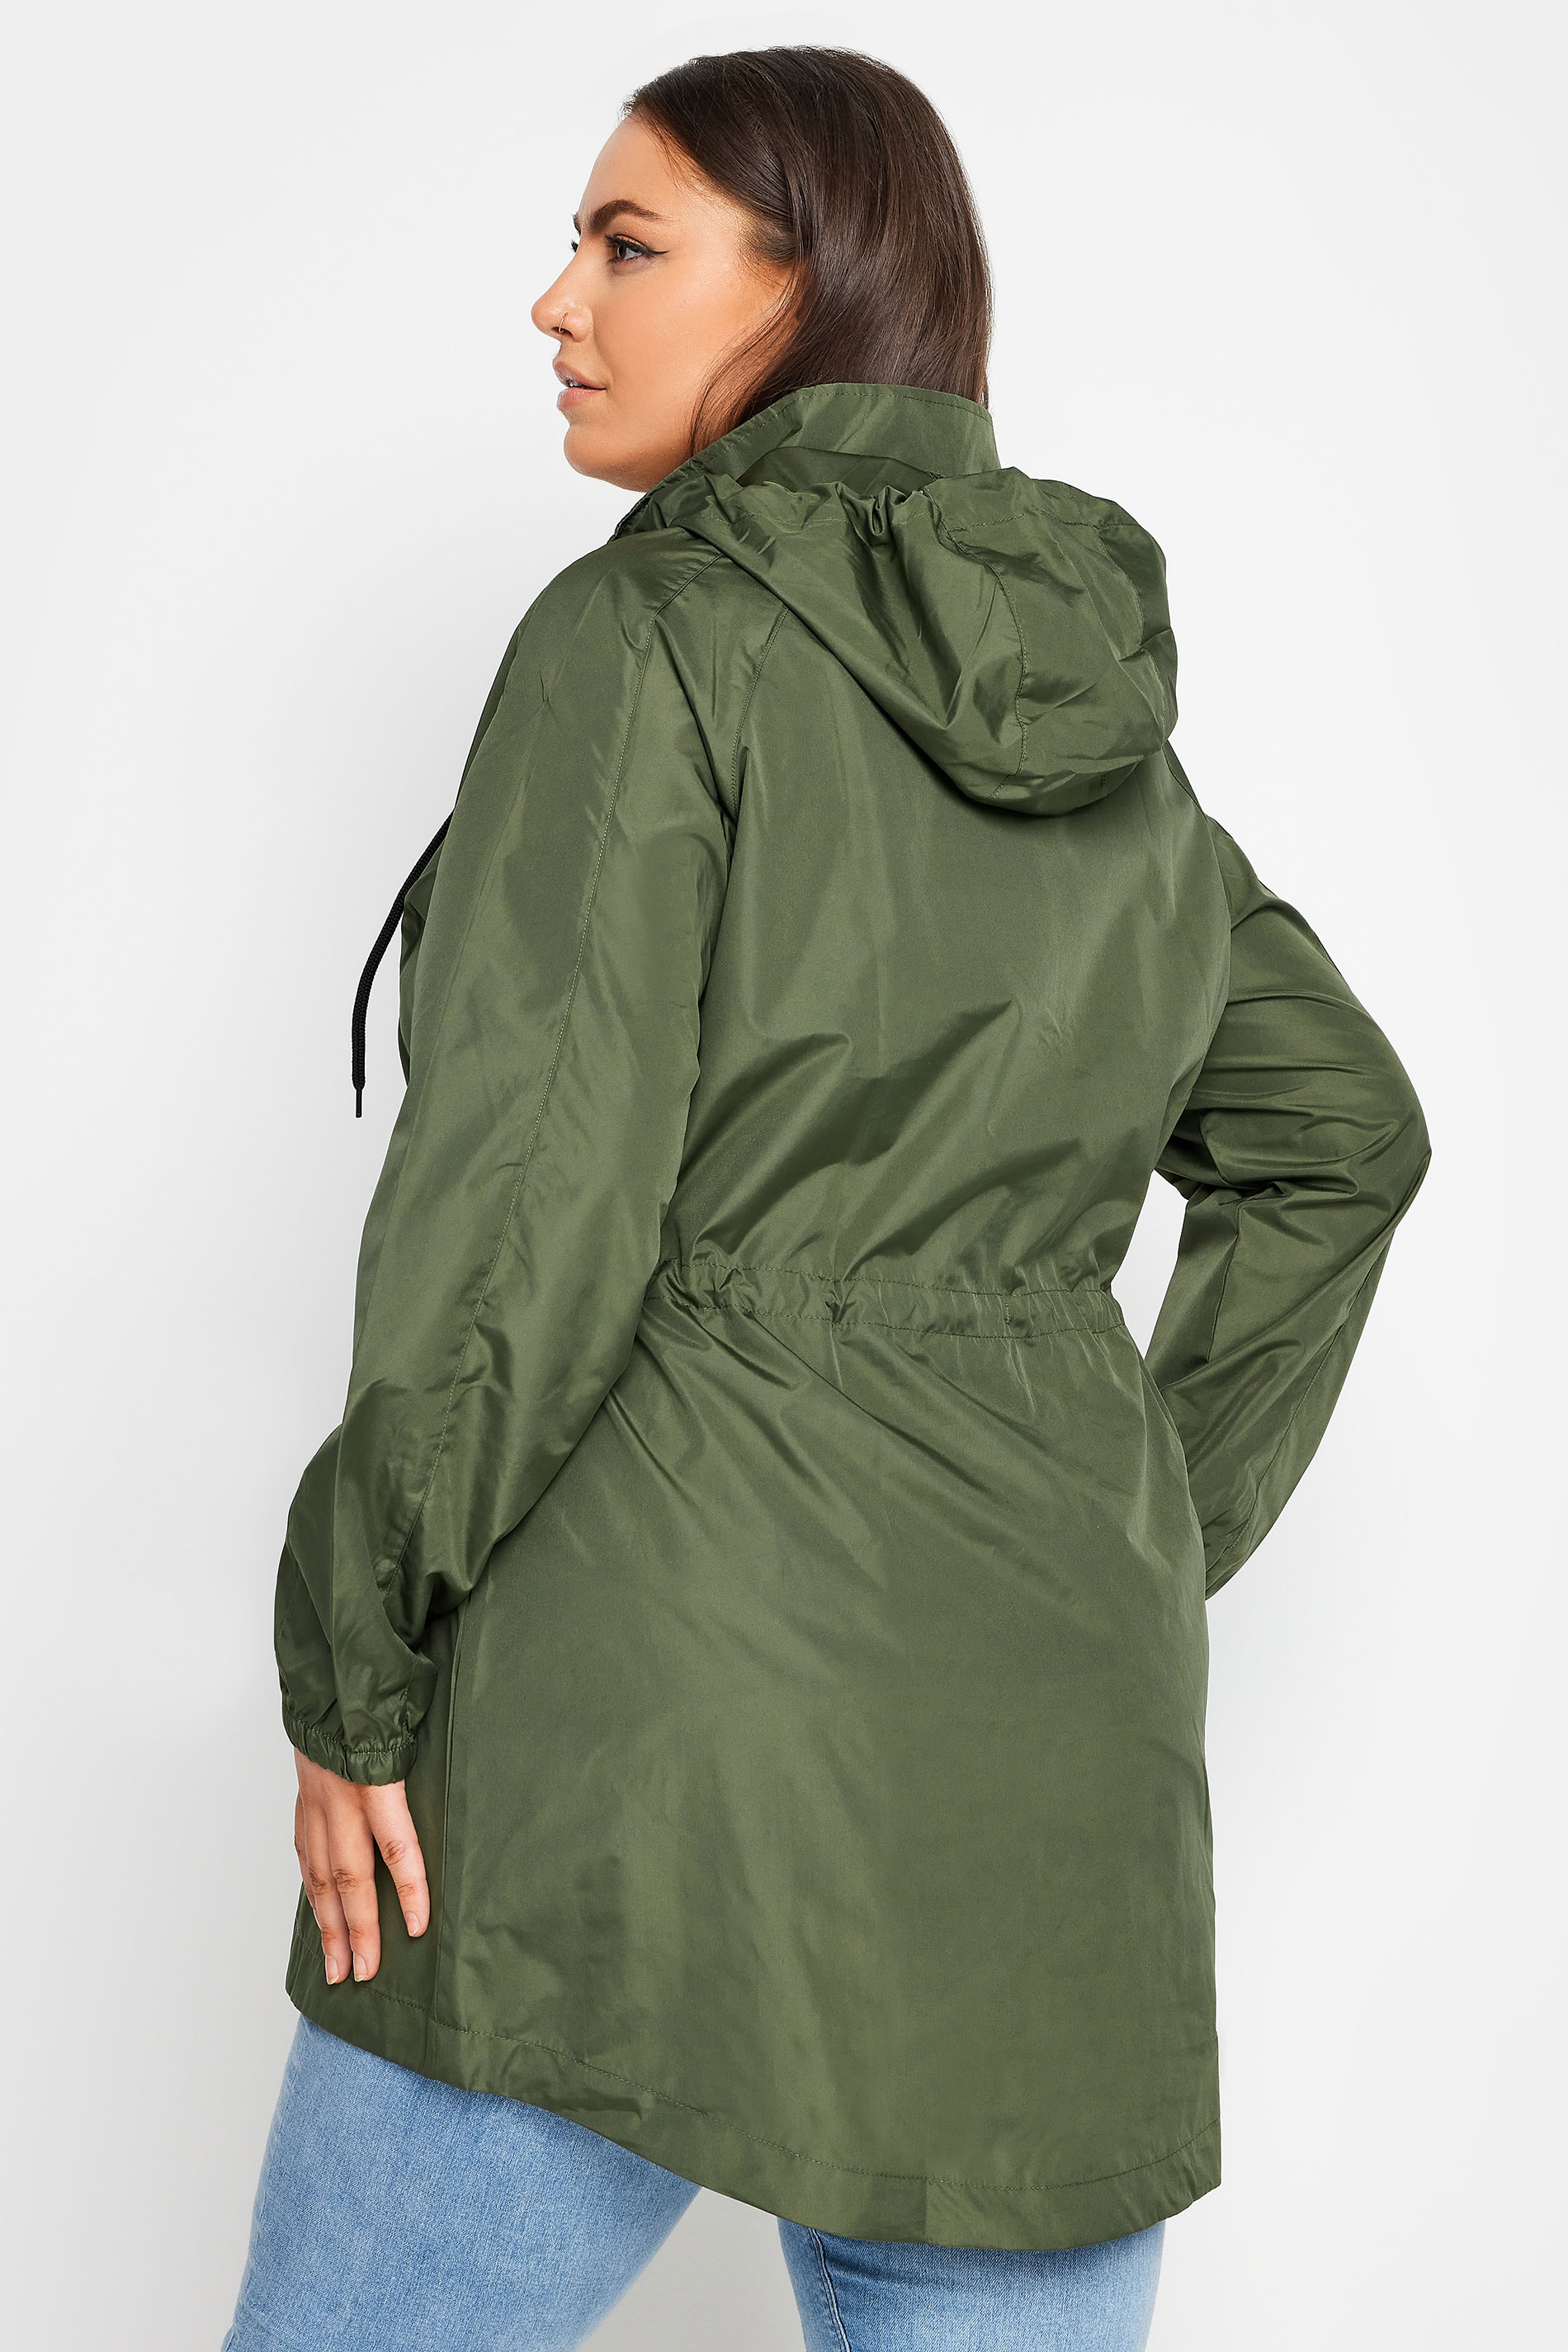 YOURS Plus Size Khaki Green Drawstring Lightweight Parka Jacket | Yours Clothing 3